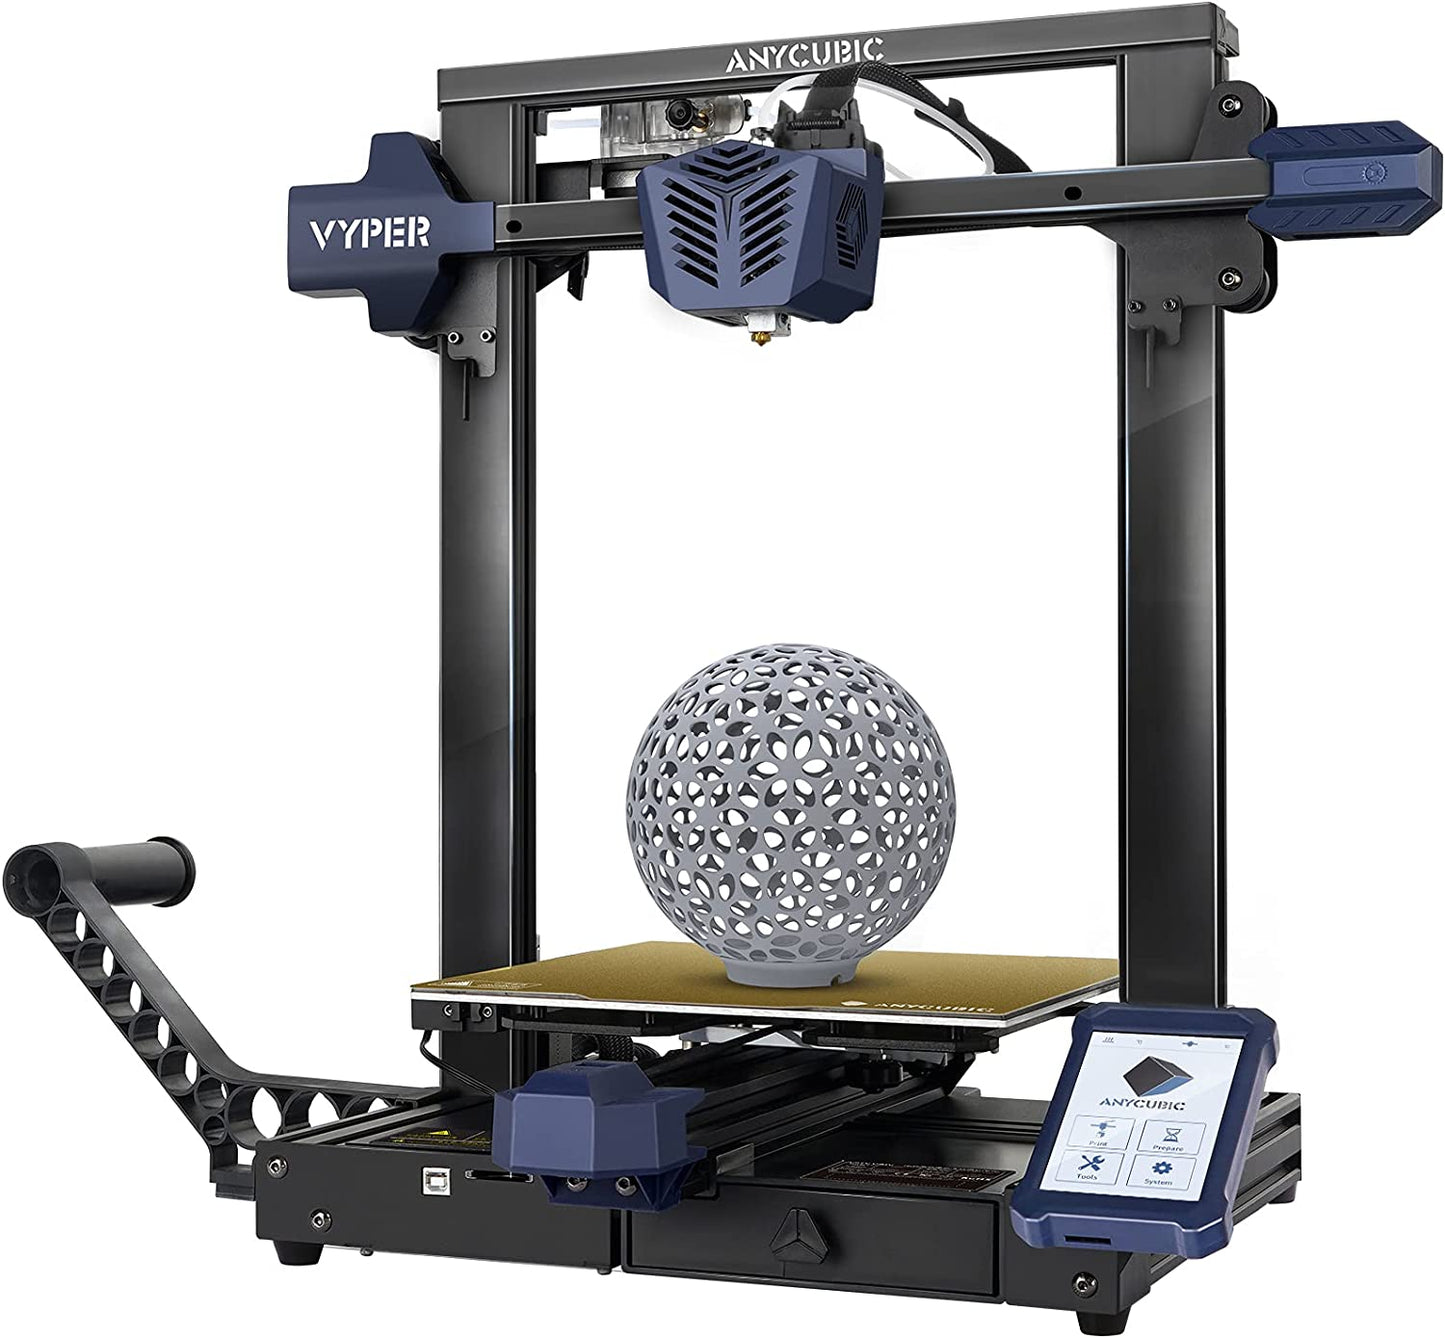 ANYCUBIC Vyper Impresora 3D, actualización de nivelación automática, impresora FDM rápida, diseño de estructura integrada con TMC2209 32 bits de placa base silenciosa, plataforma magnética extraíble, tamaño de impresión de 9.6 x 9.6 x 10.2 pulgadas